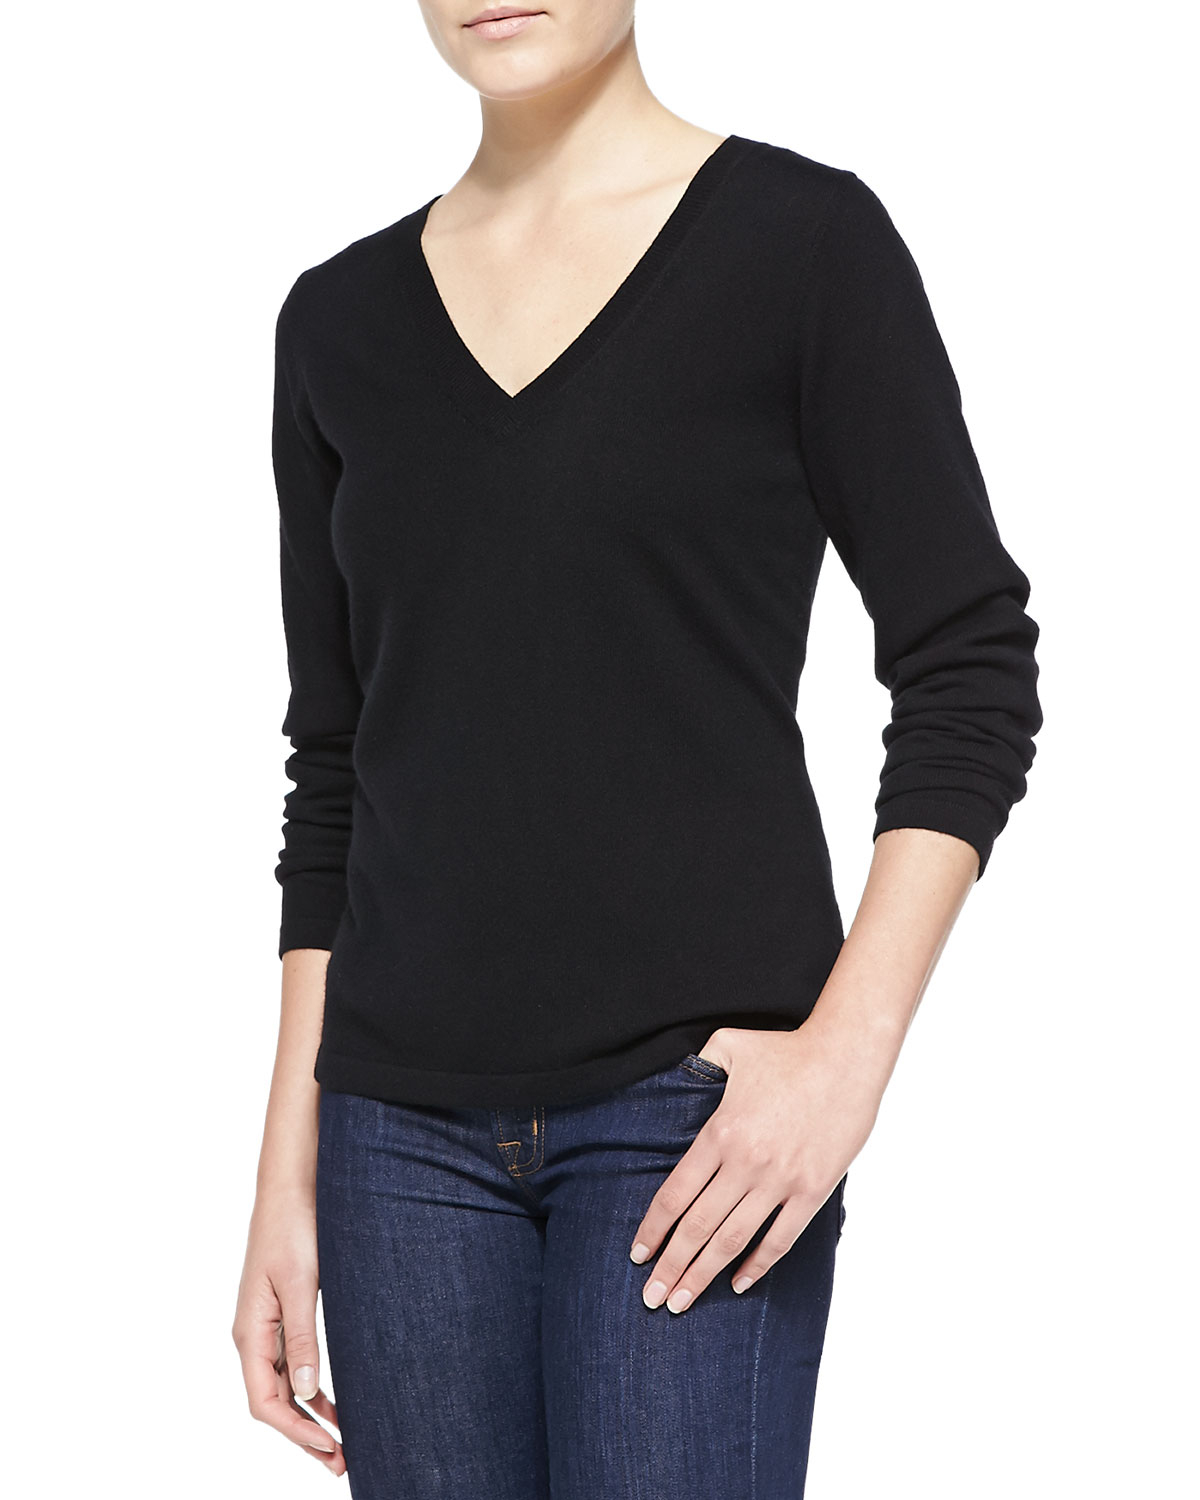 Lyst - Escada Vneck Cashmere Pullover Sweater in Black